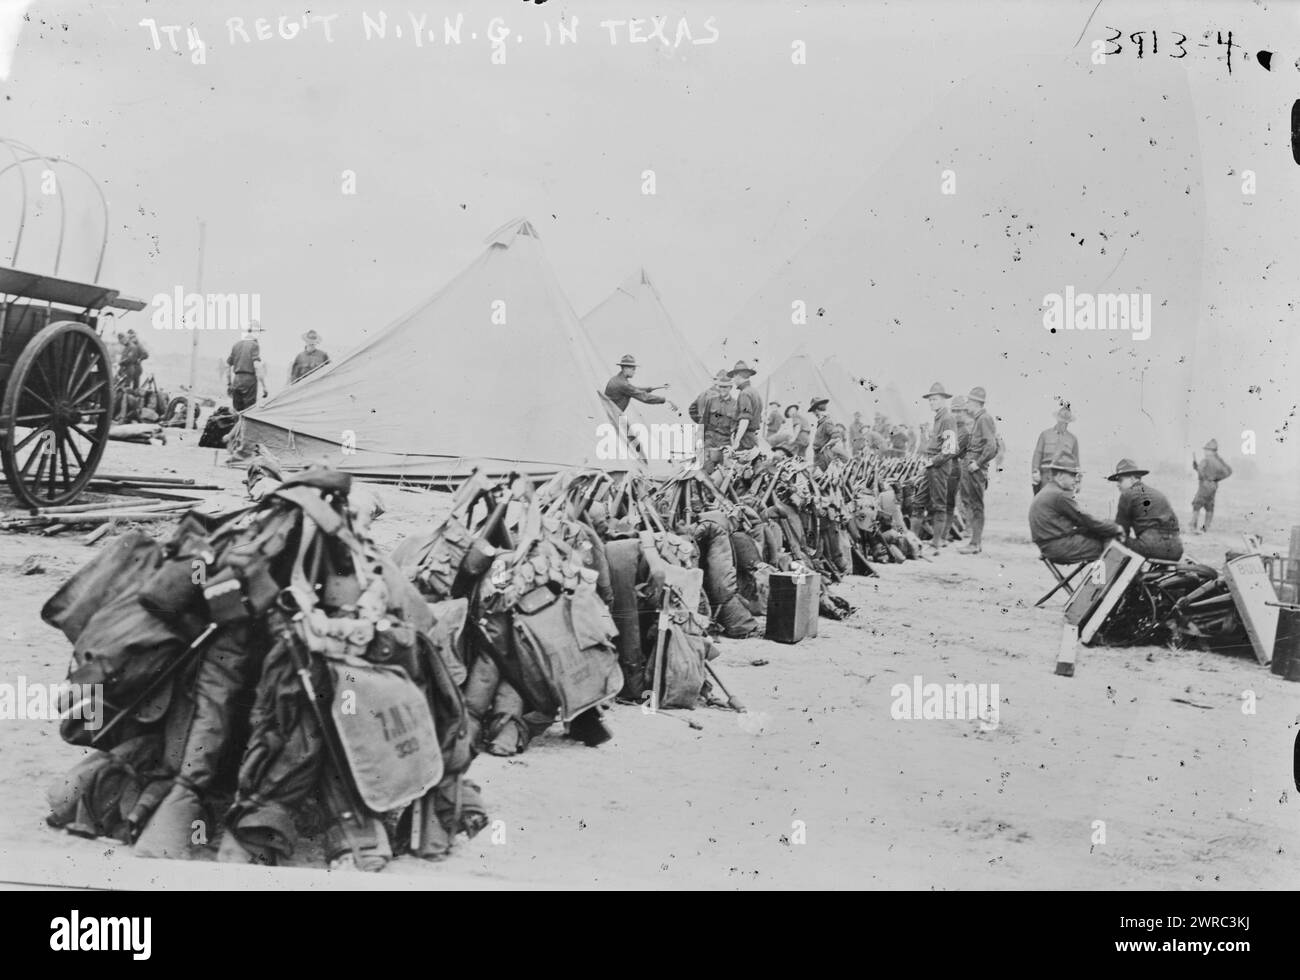 7th Reg't N.Y. N.G. in Texas, Foto zeigt die 7th New York Infantry in ihrem Lager in South Texas im Juli 1916., 1916 Juli, Glass negative, 1 negative: Glass Stockfoto